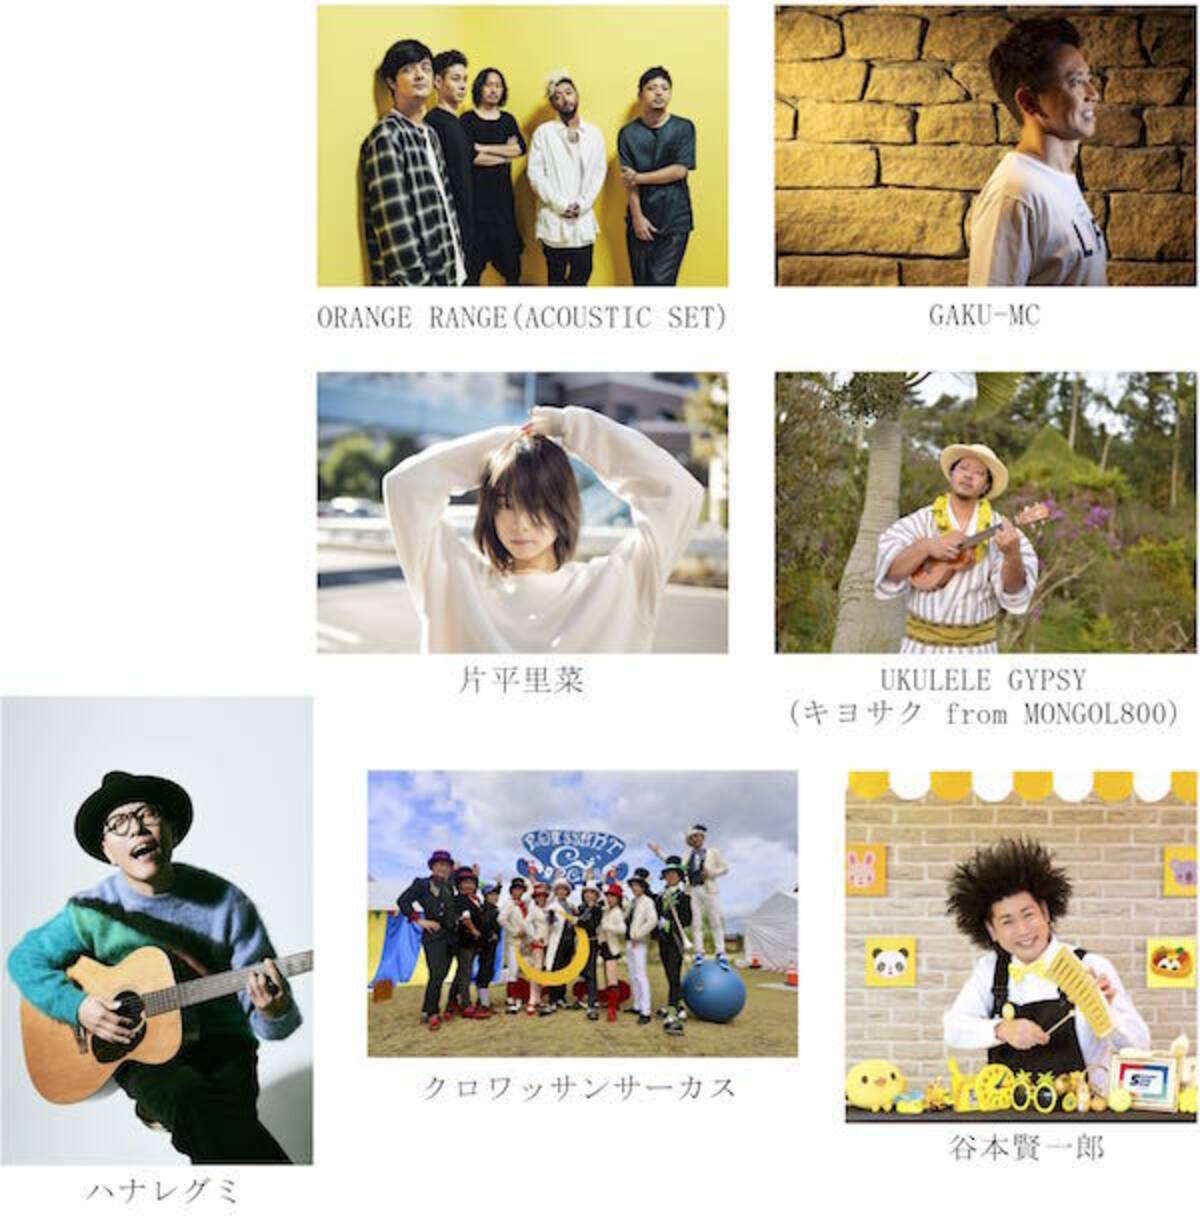 Orange Range Acoustic Set ハナレグミなど21組のアーティストが福島に集結 Song Of The Earth 311 Fukushima 年1月23日 エキサイトニュース